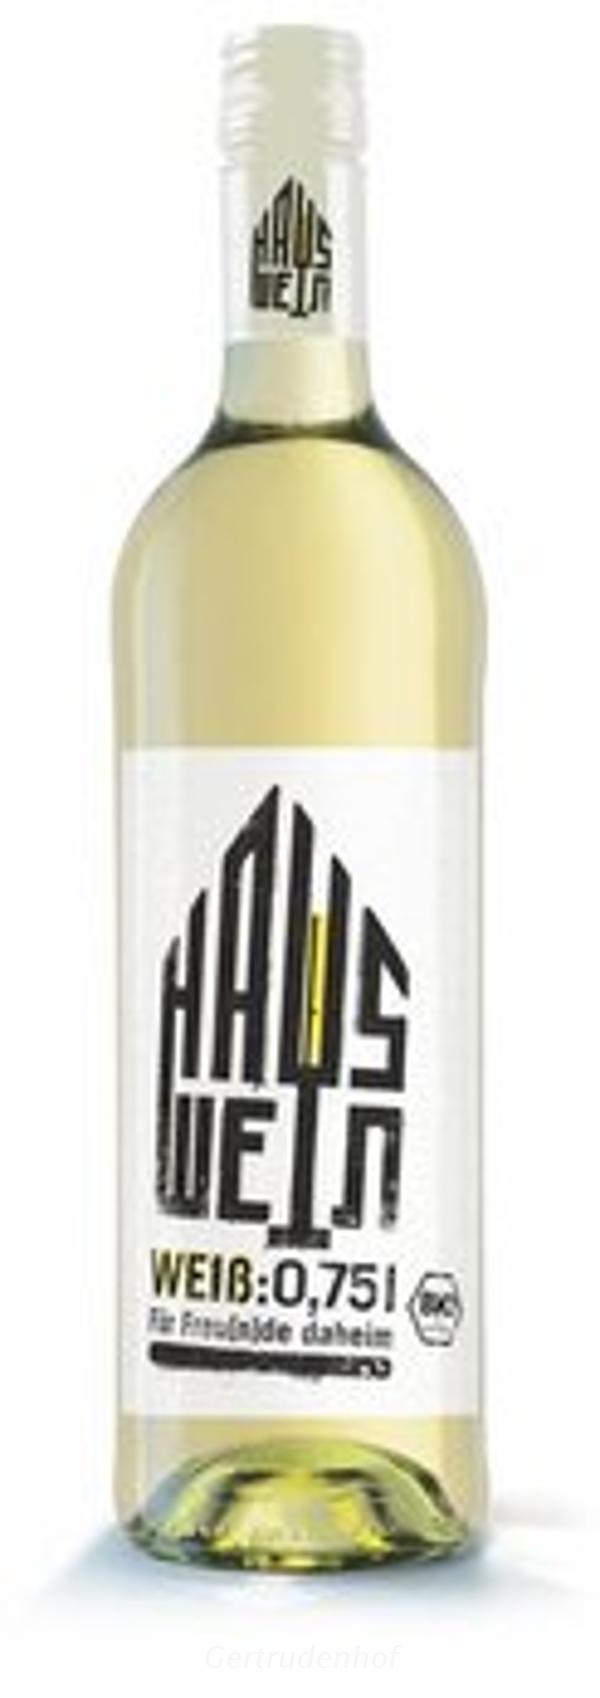 Produktfoto zu Hauswein WEISS 8 Grad (ACG)